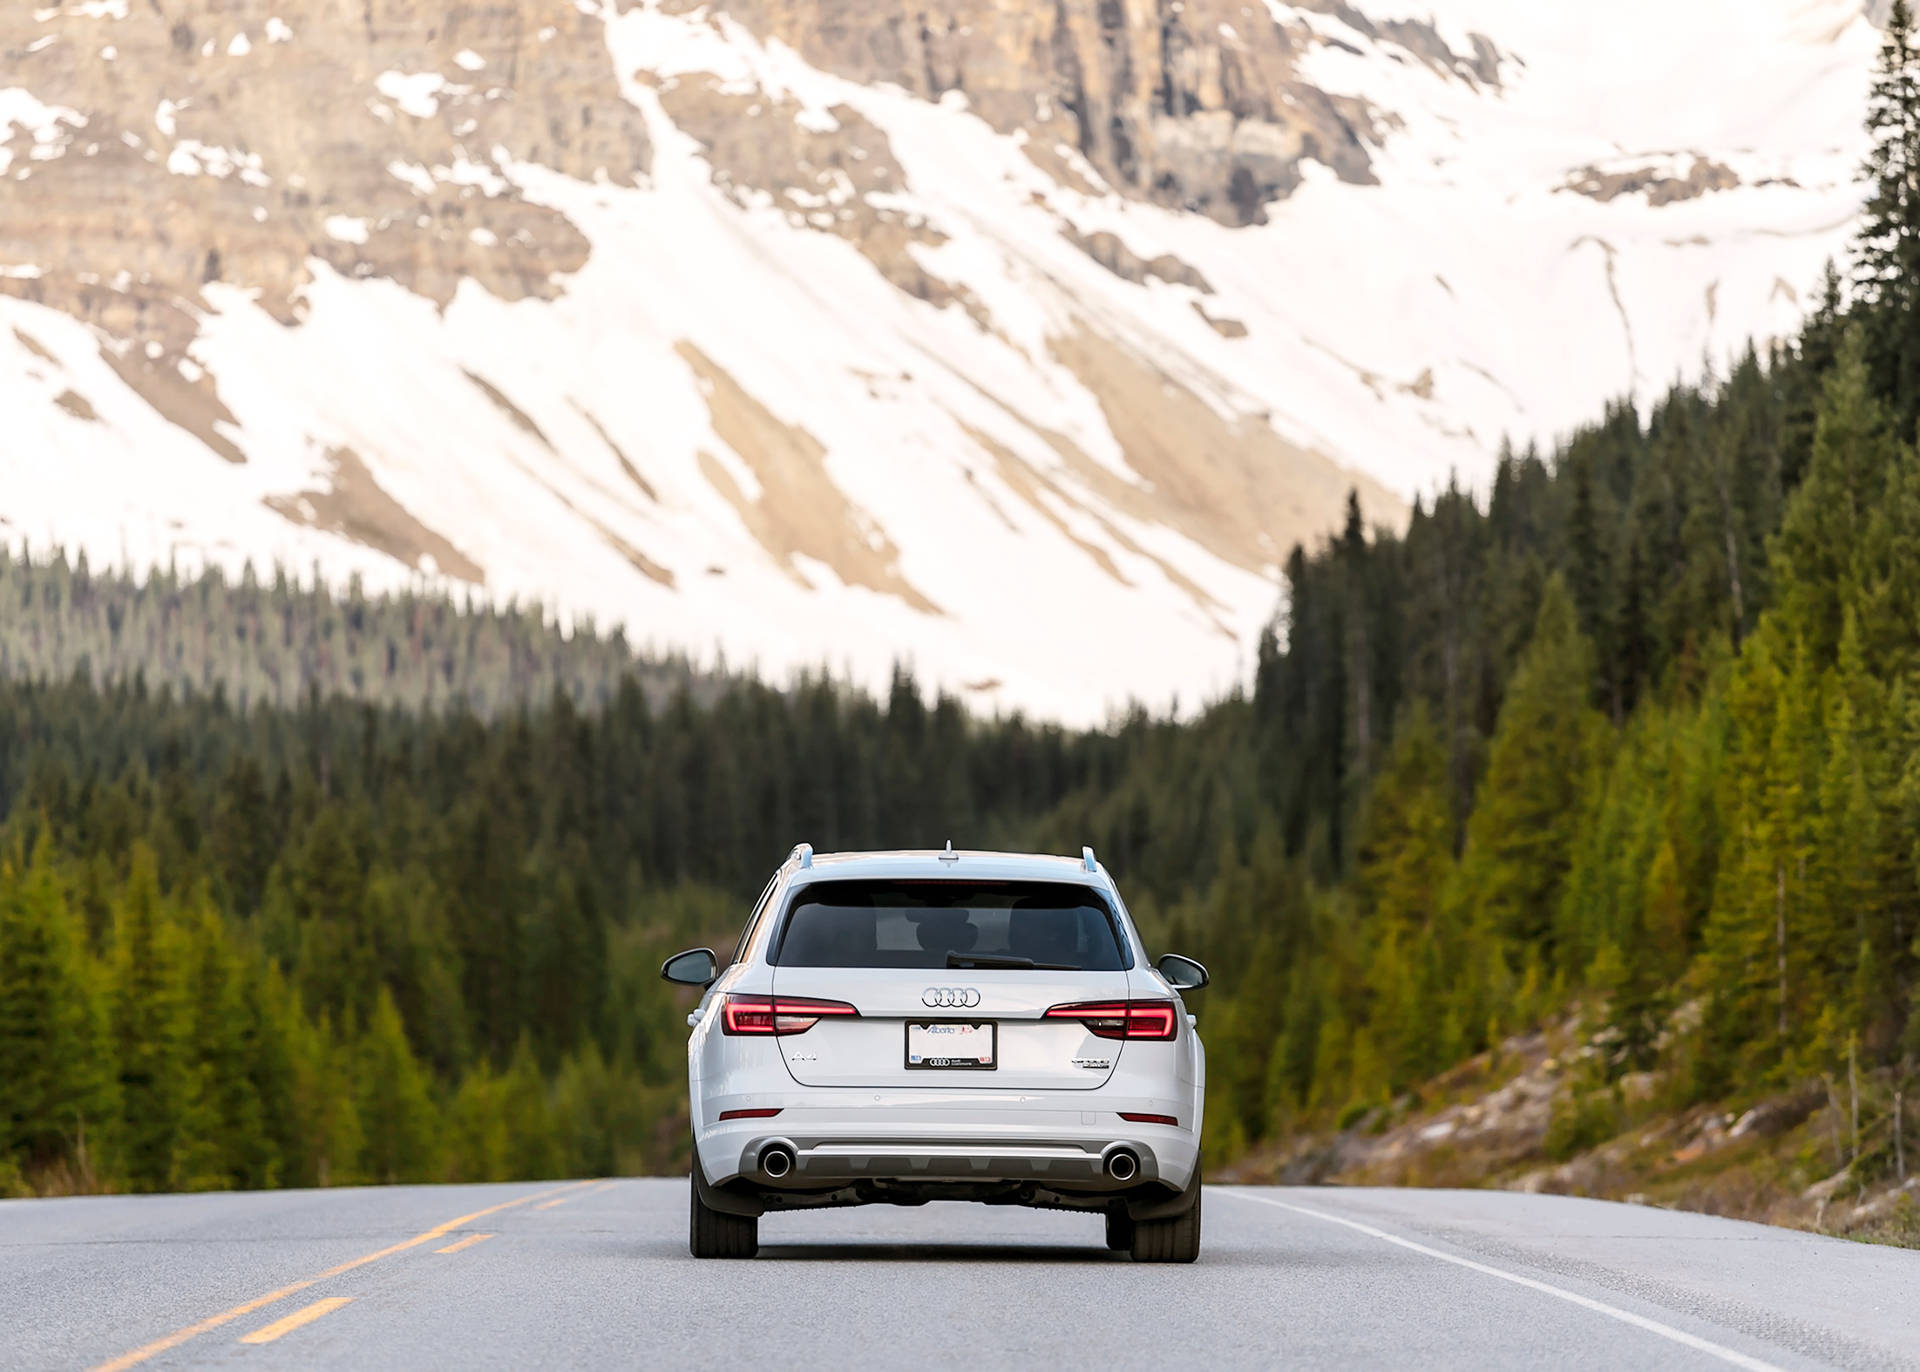 Audi A4 Rear View Landscape Wallpaper